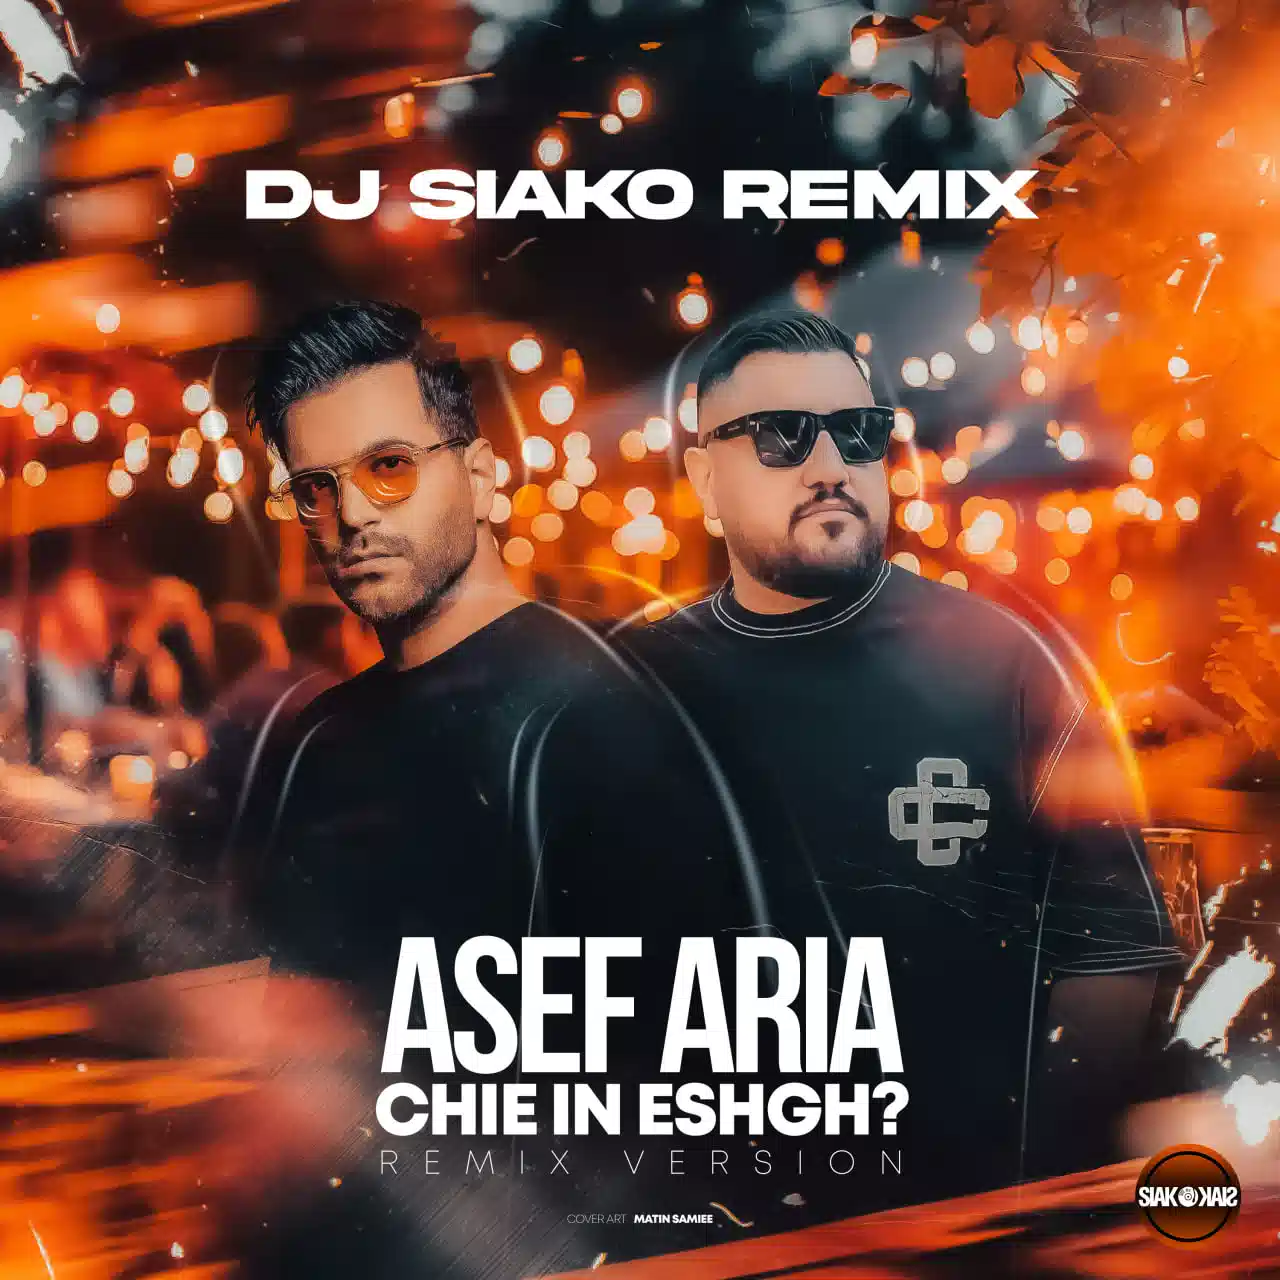 Asef Aria - Chie in Eshgh Remix by Siako